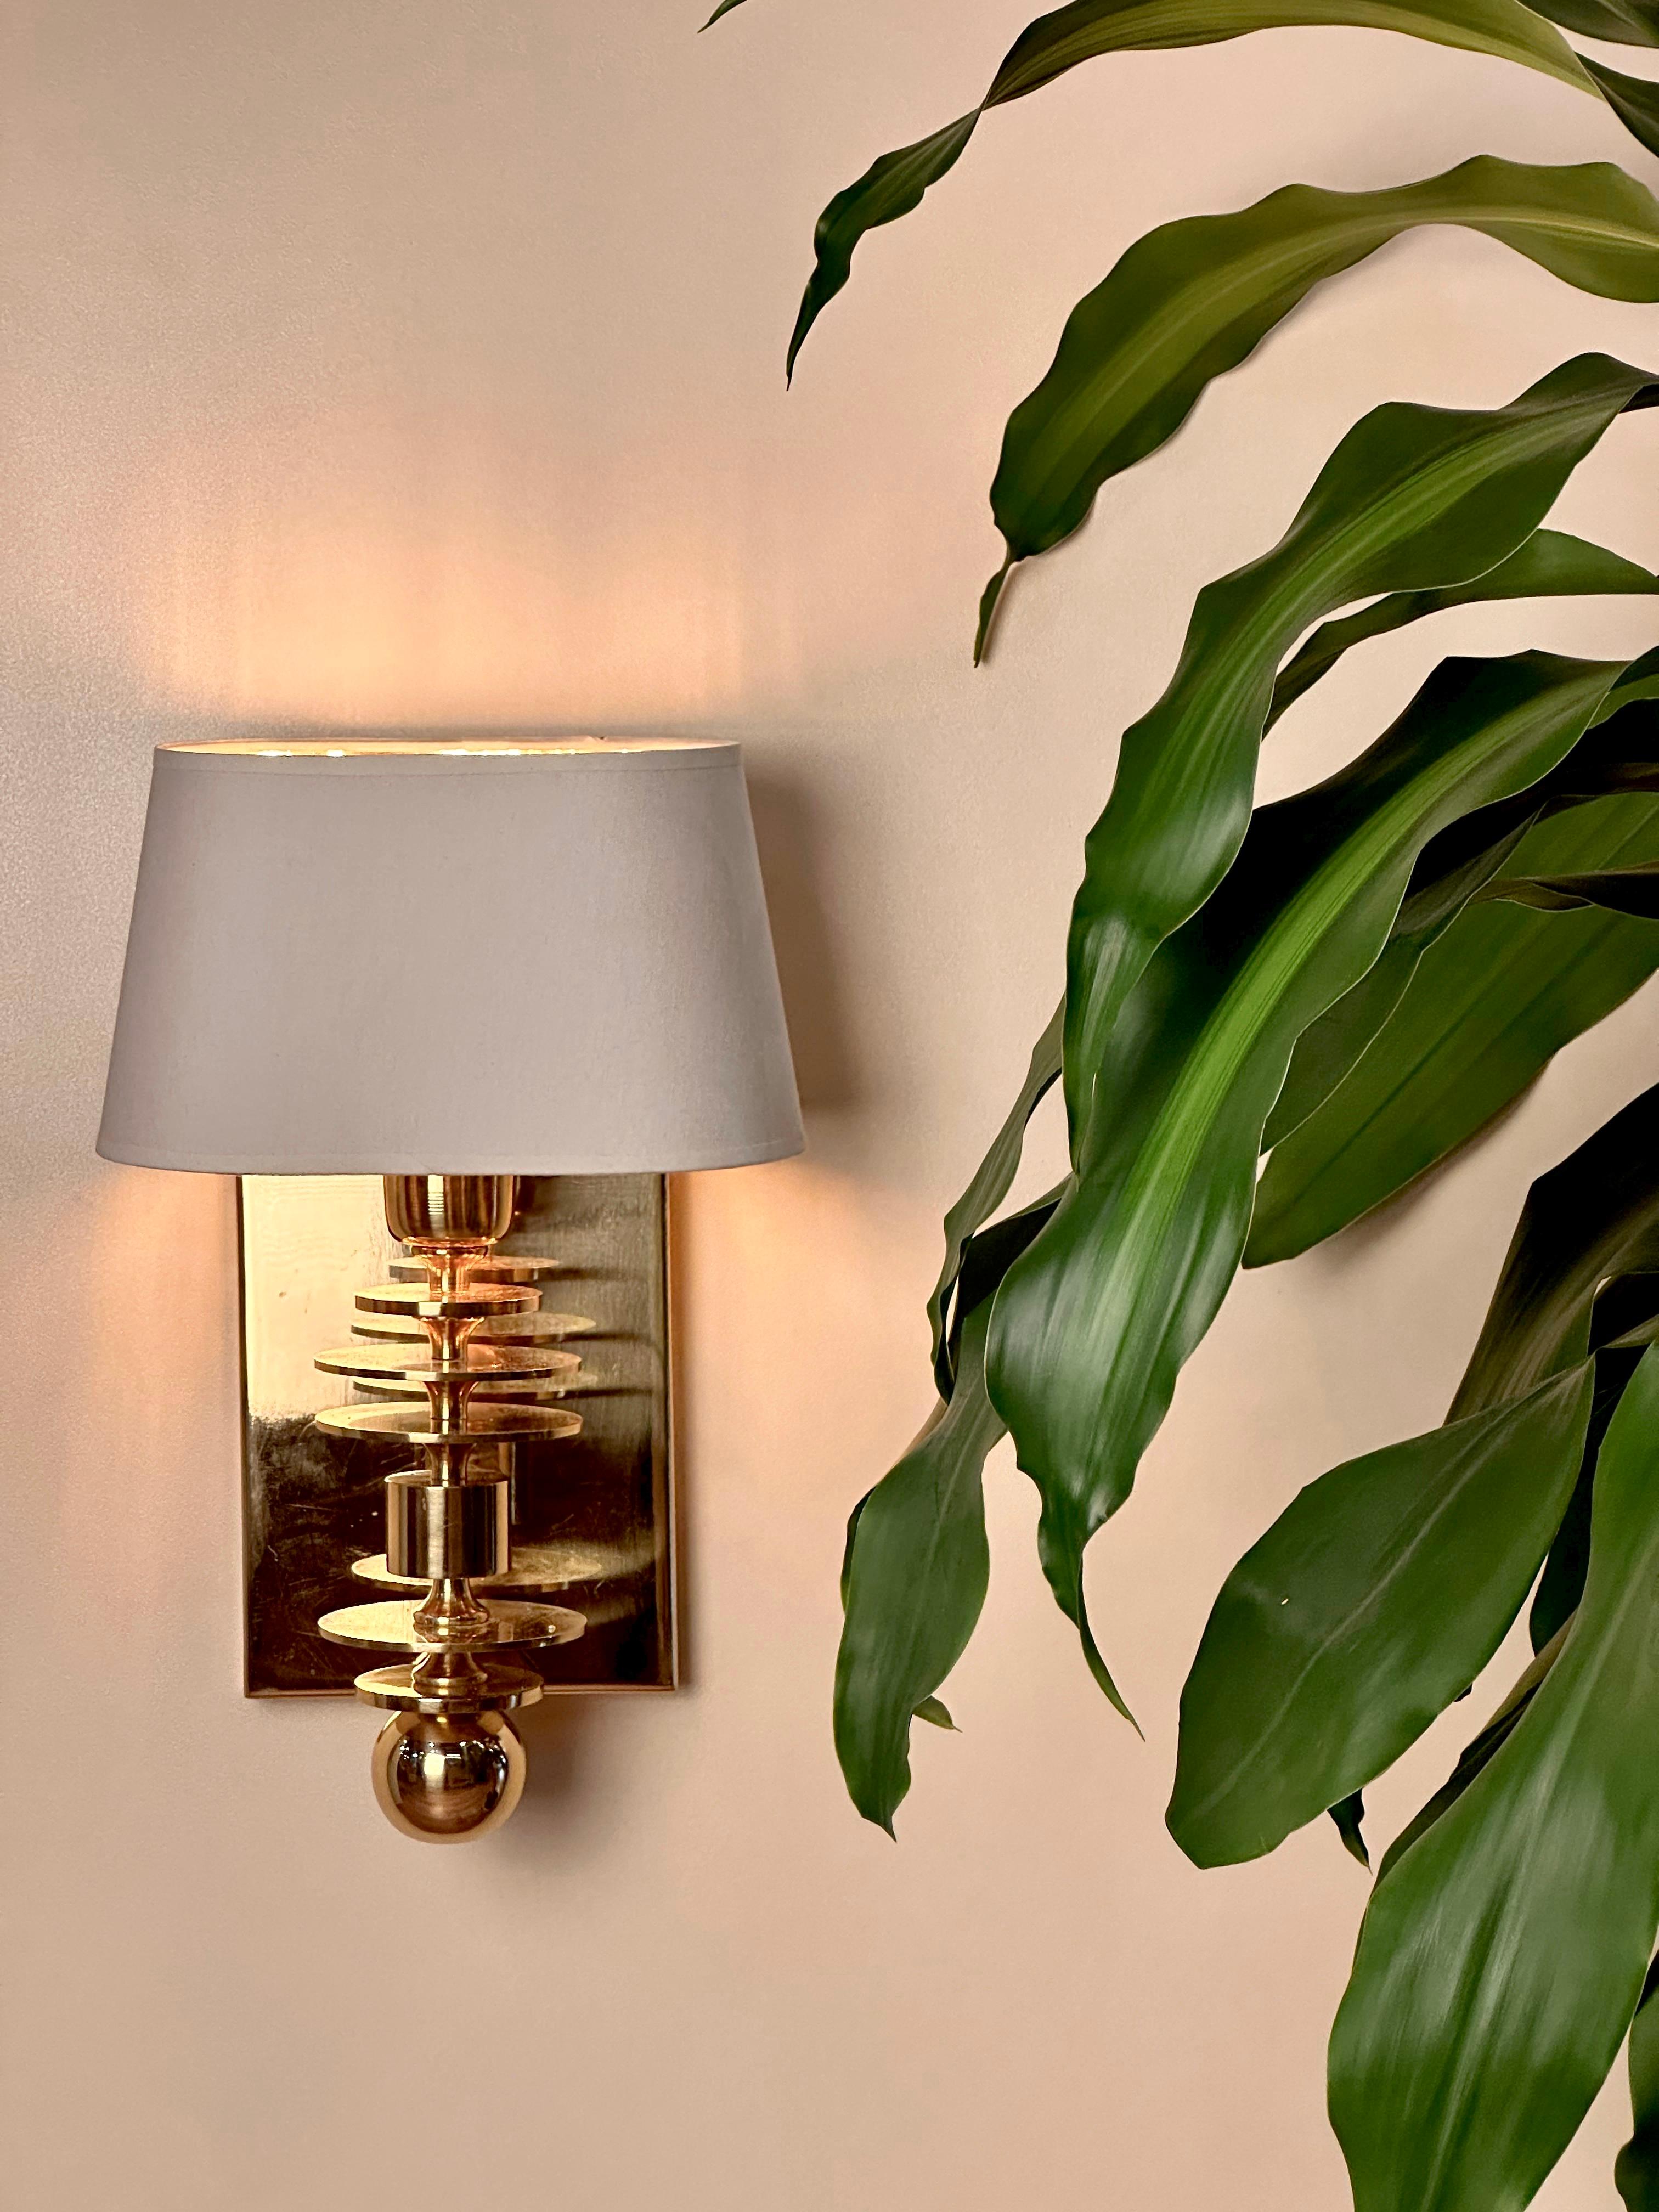 Marsala Shade Brass Wall Sconce Mid-Century Modern Lighting For Sale 1